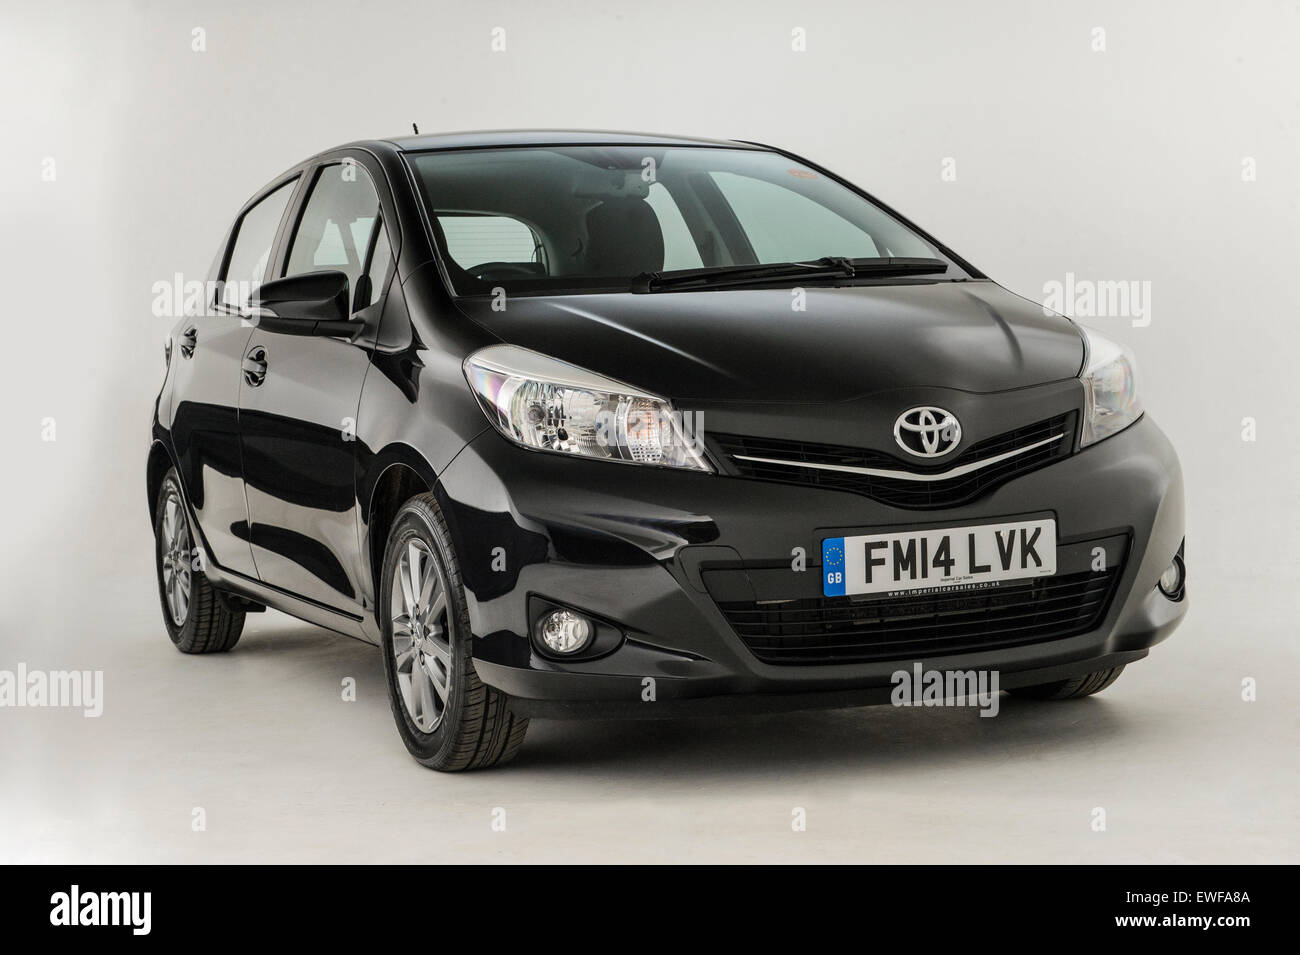 2014 Toyota Yaris Foto Stock